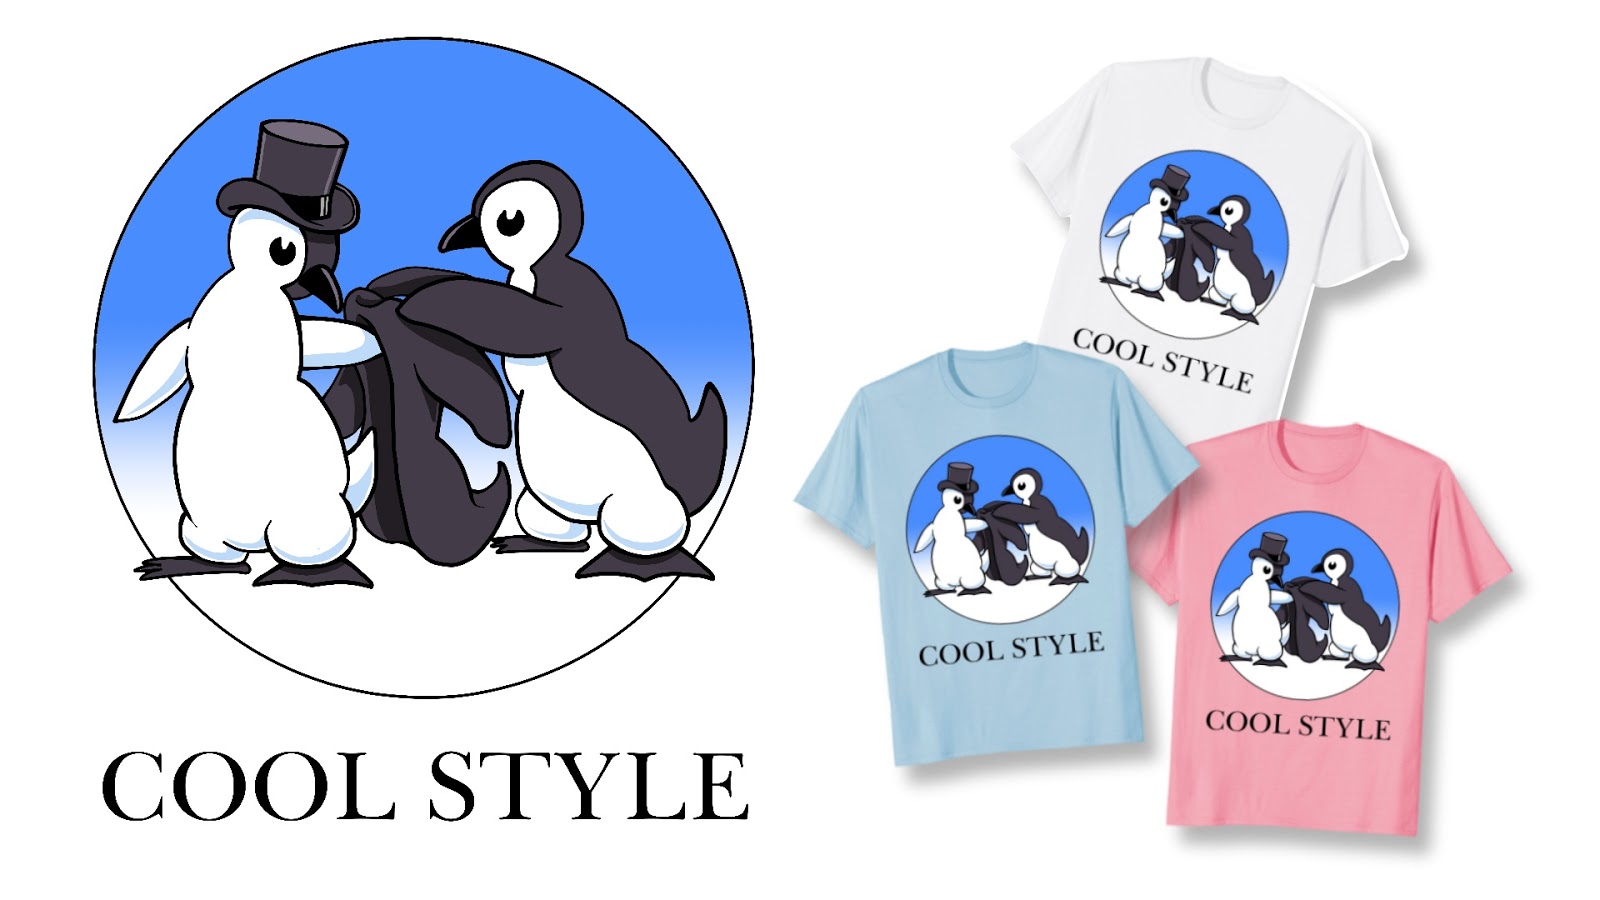 Designing Formal Penguins - New Humorous T-Shirt Art by TET (Part 2)